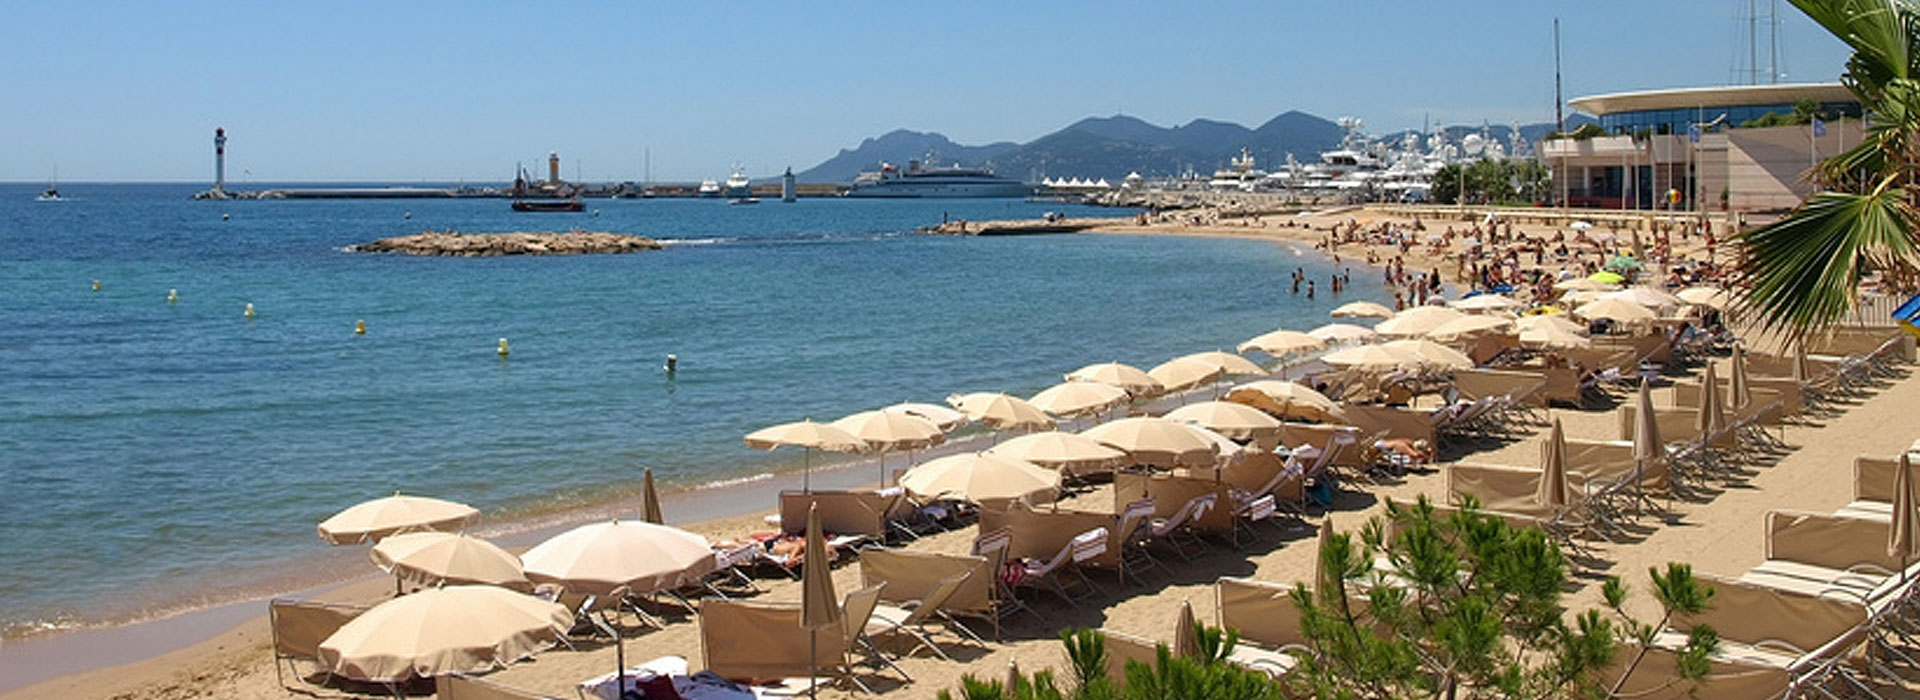 Cannes - Côte d'Azur - French Riviera